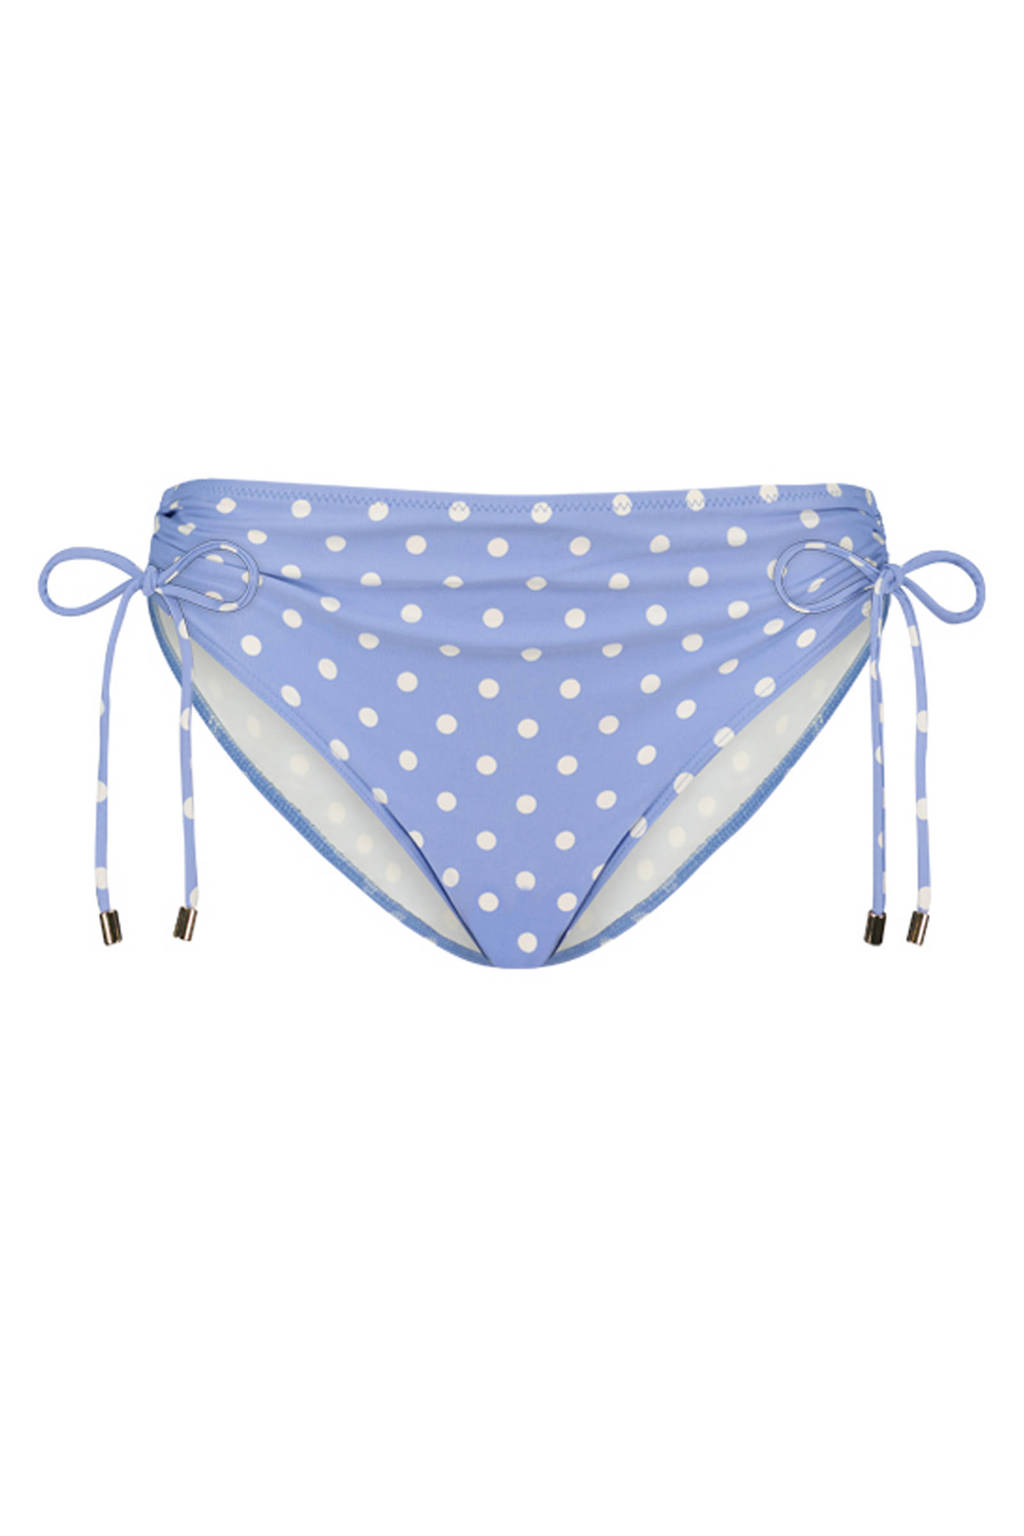 Cyell high waist bikinibroekje Just Dot lichtblauw/wit